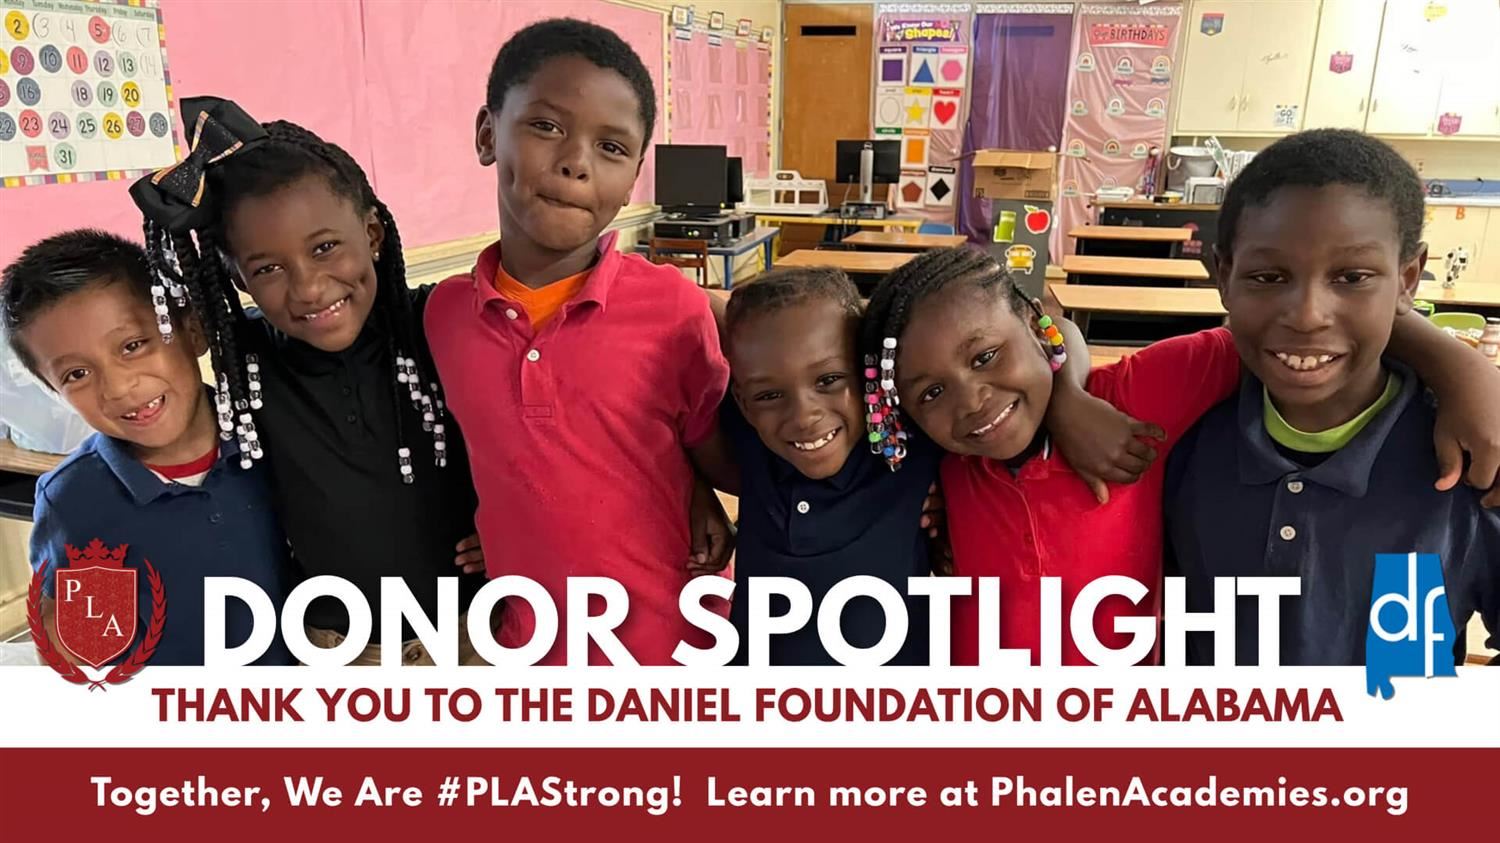 The Daniel Foundation awards Davis Elementary $75,000